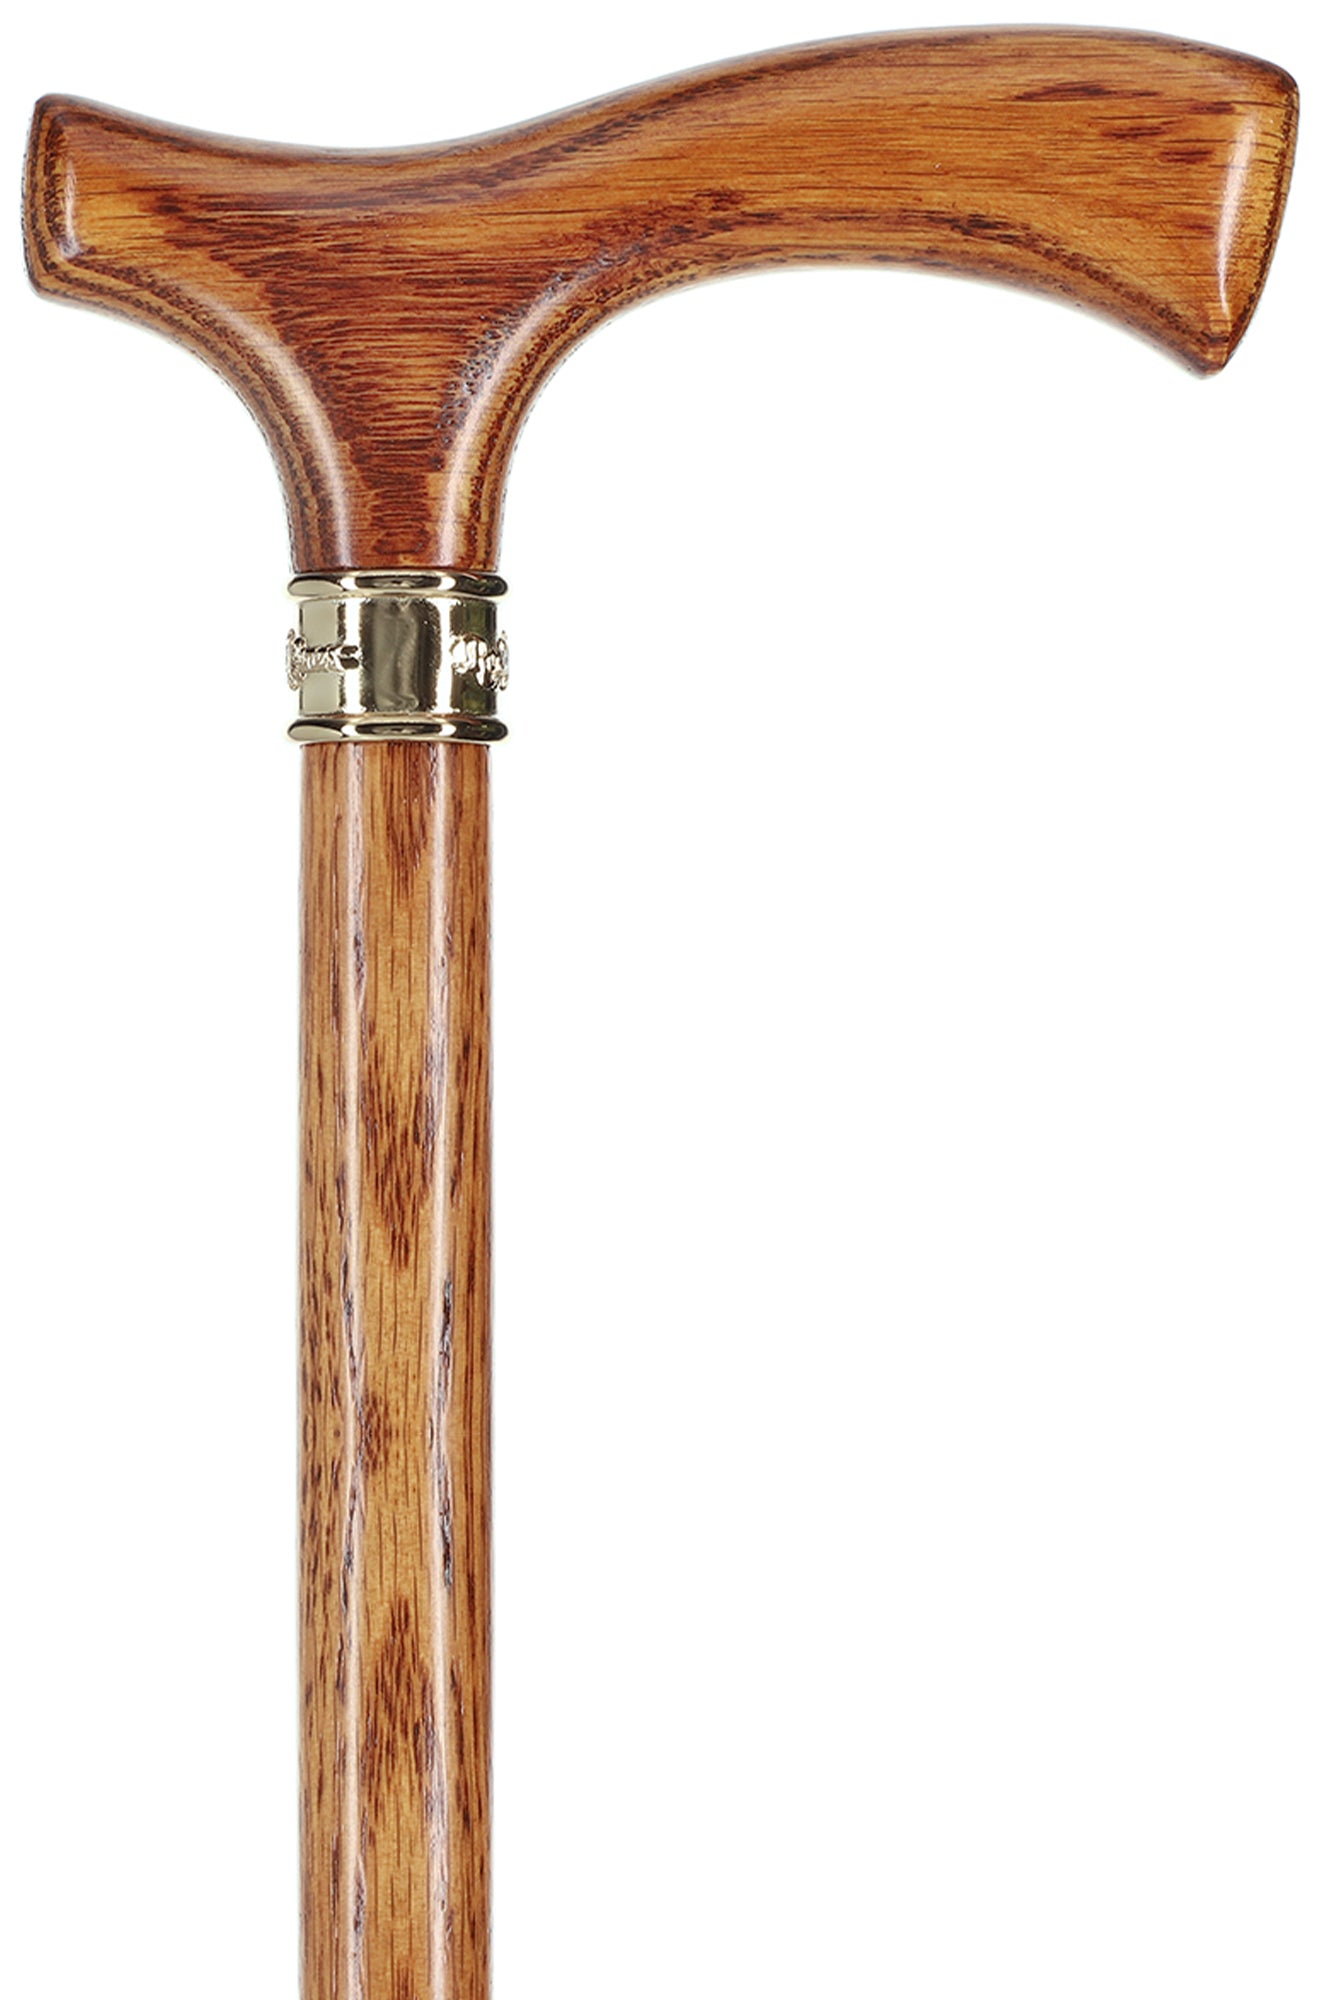 Elegant Knob Walking Stick Cane - Fashion Stylish Wooden Walking Canes  Handcrafted -, 36 Inches